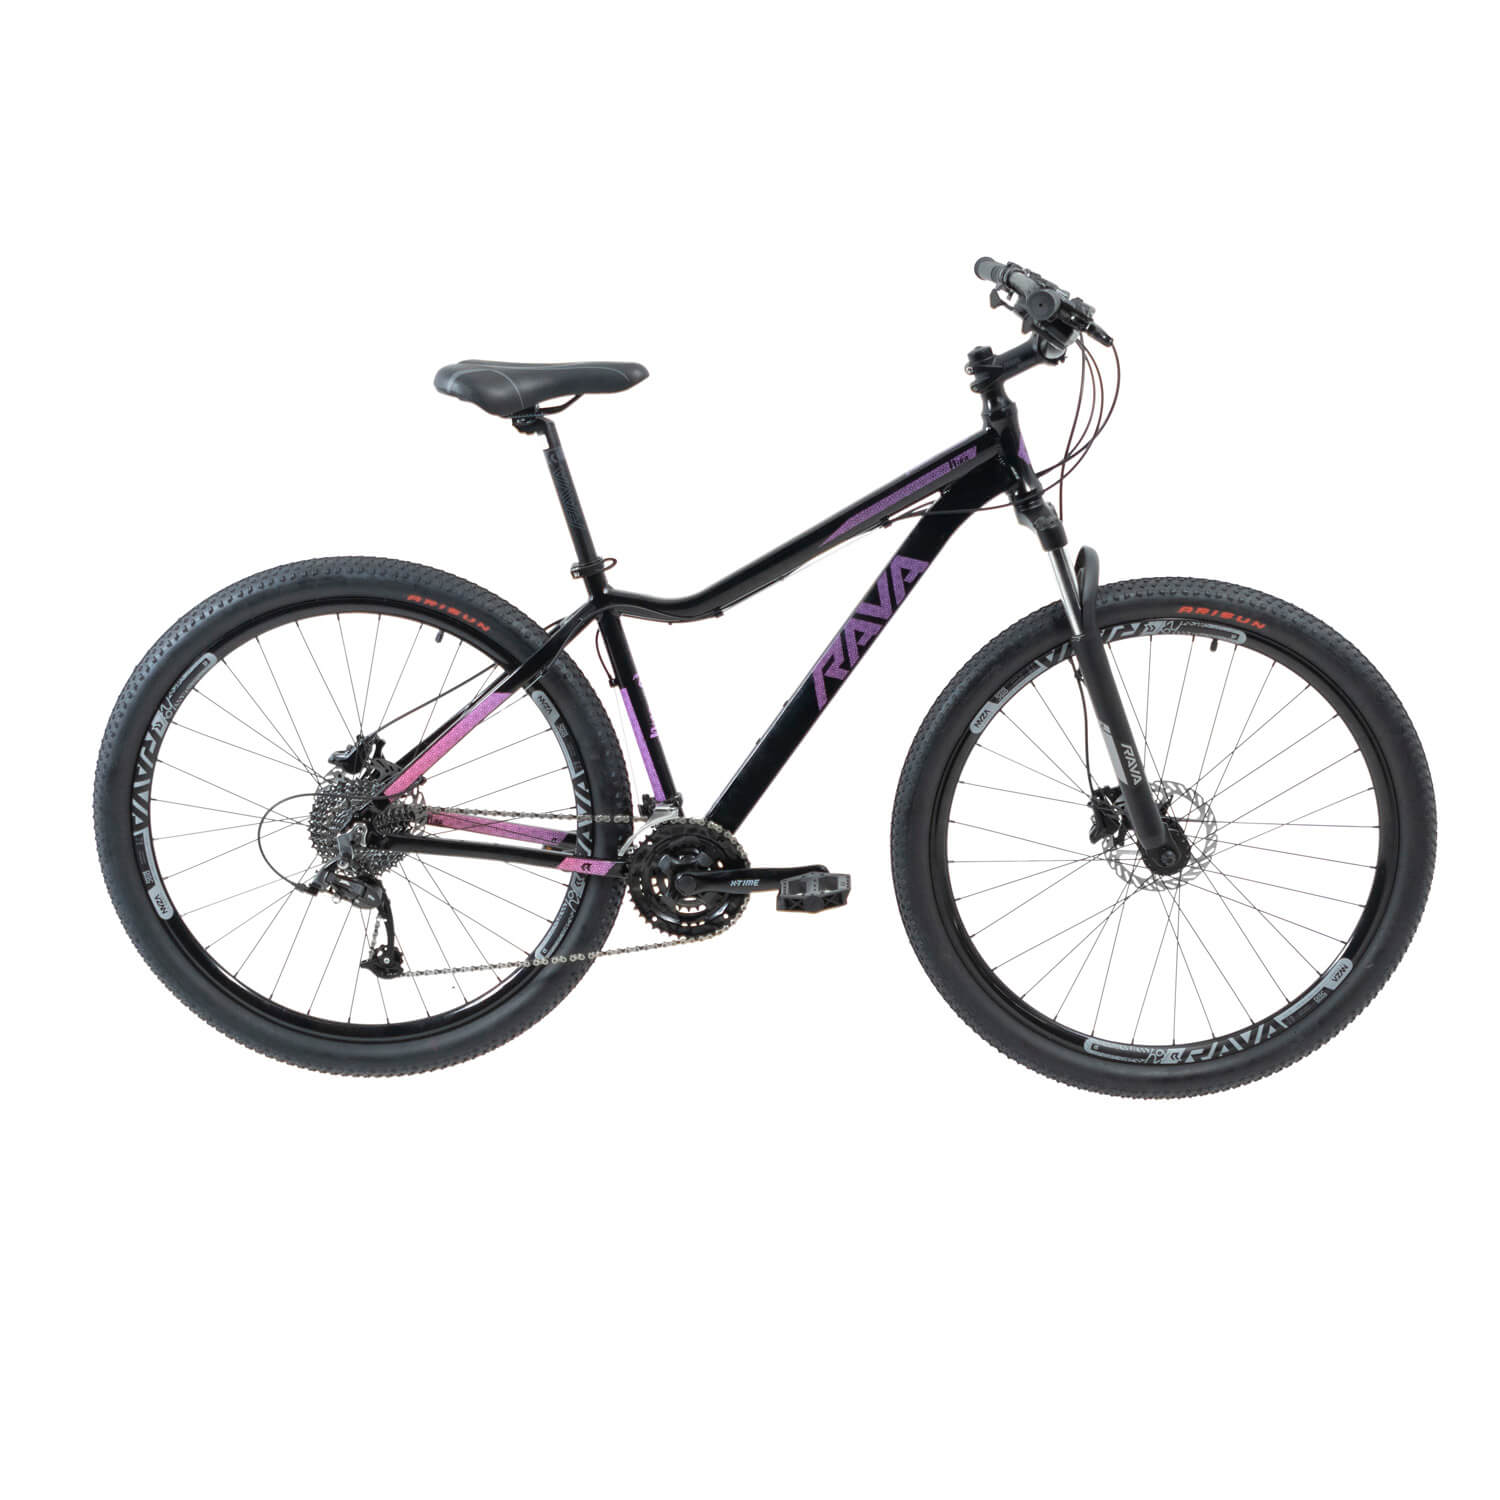 Bicicleta Rava Nina | 30 v. - Preto/Pink/Violeta, 17"